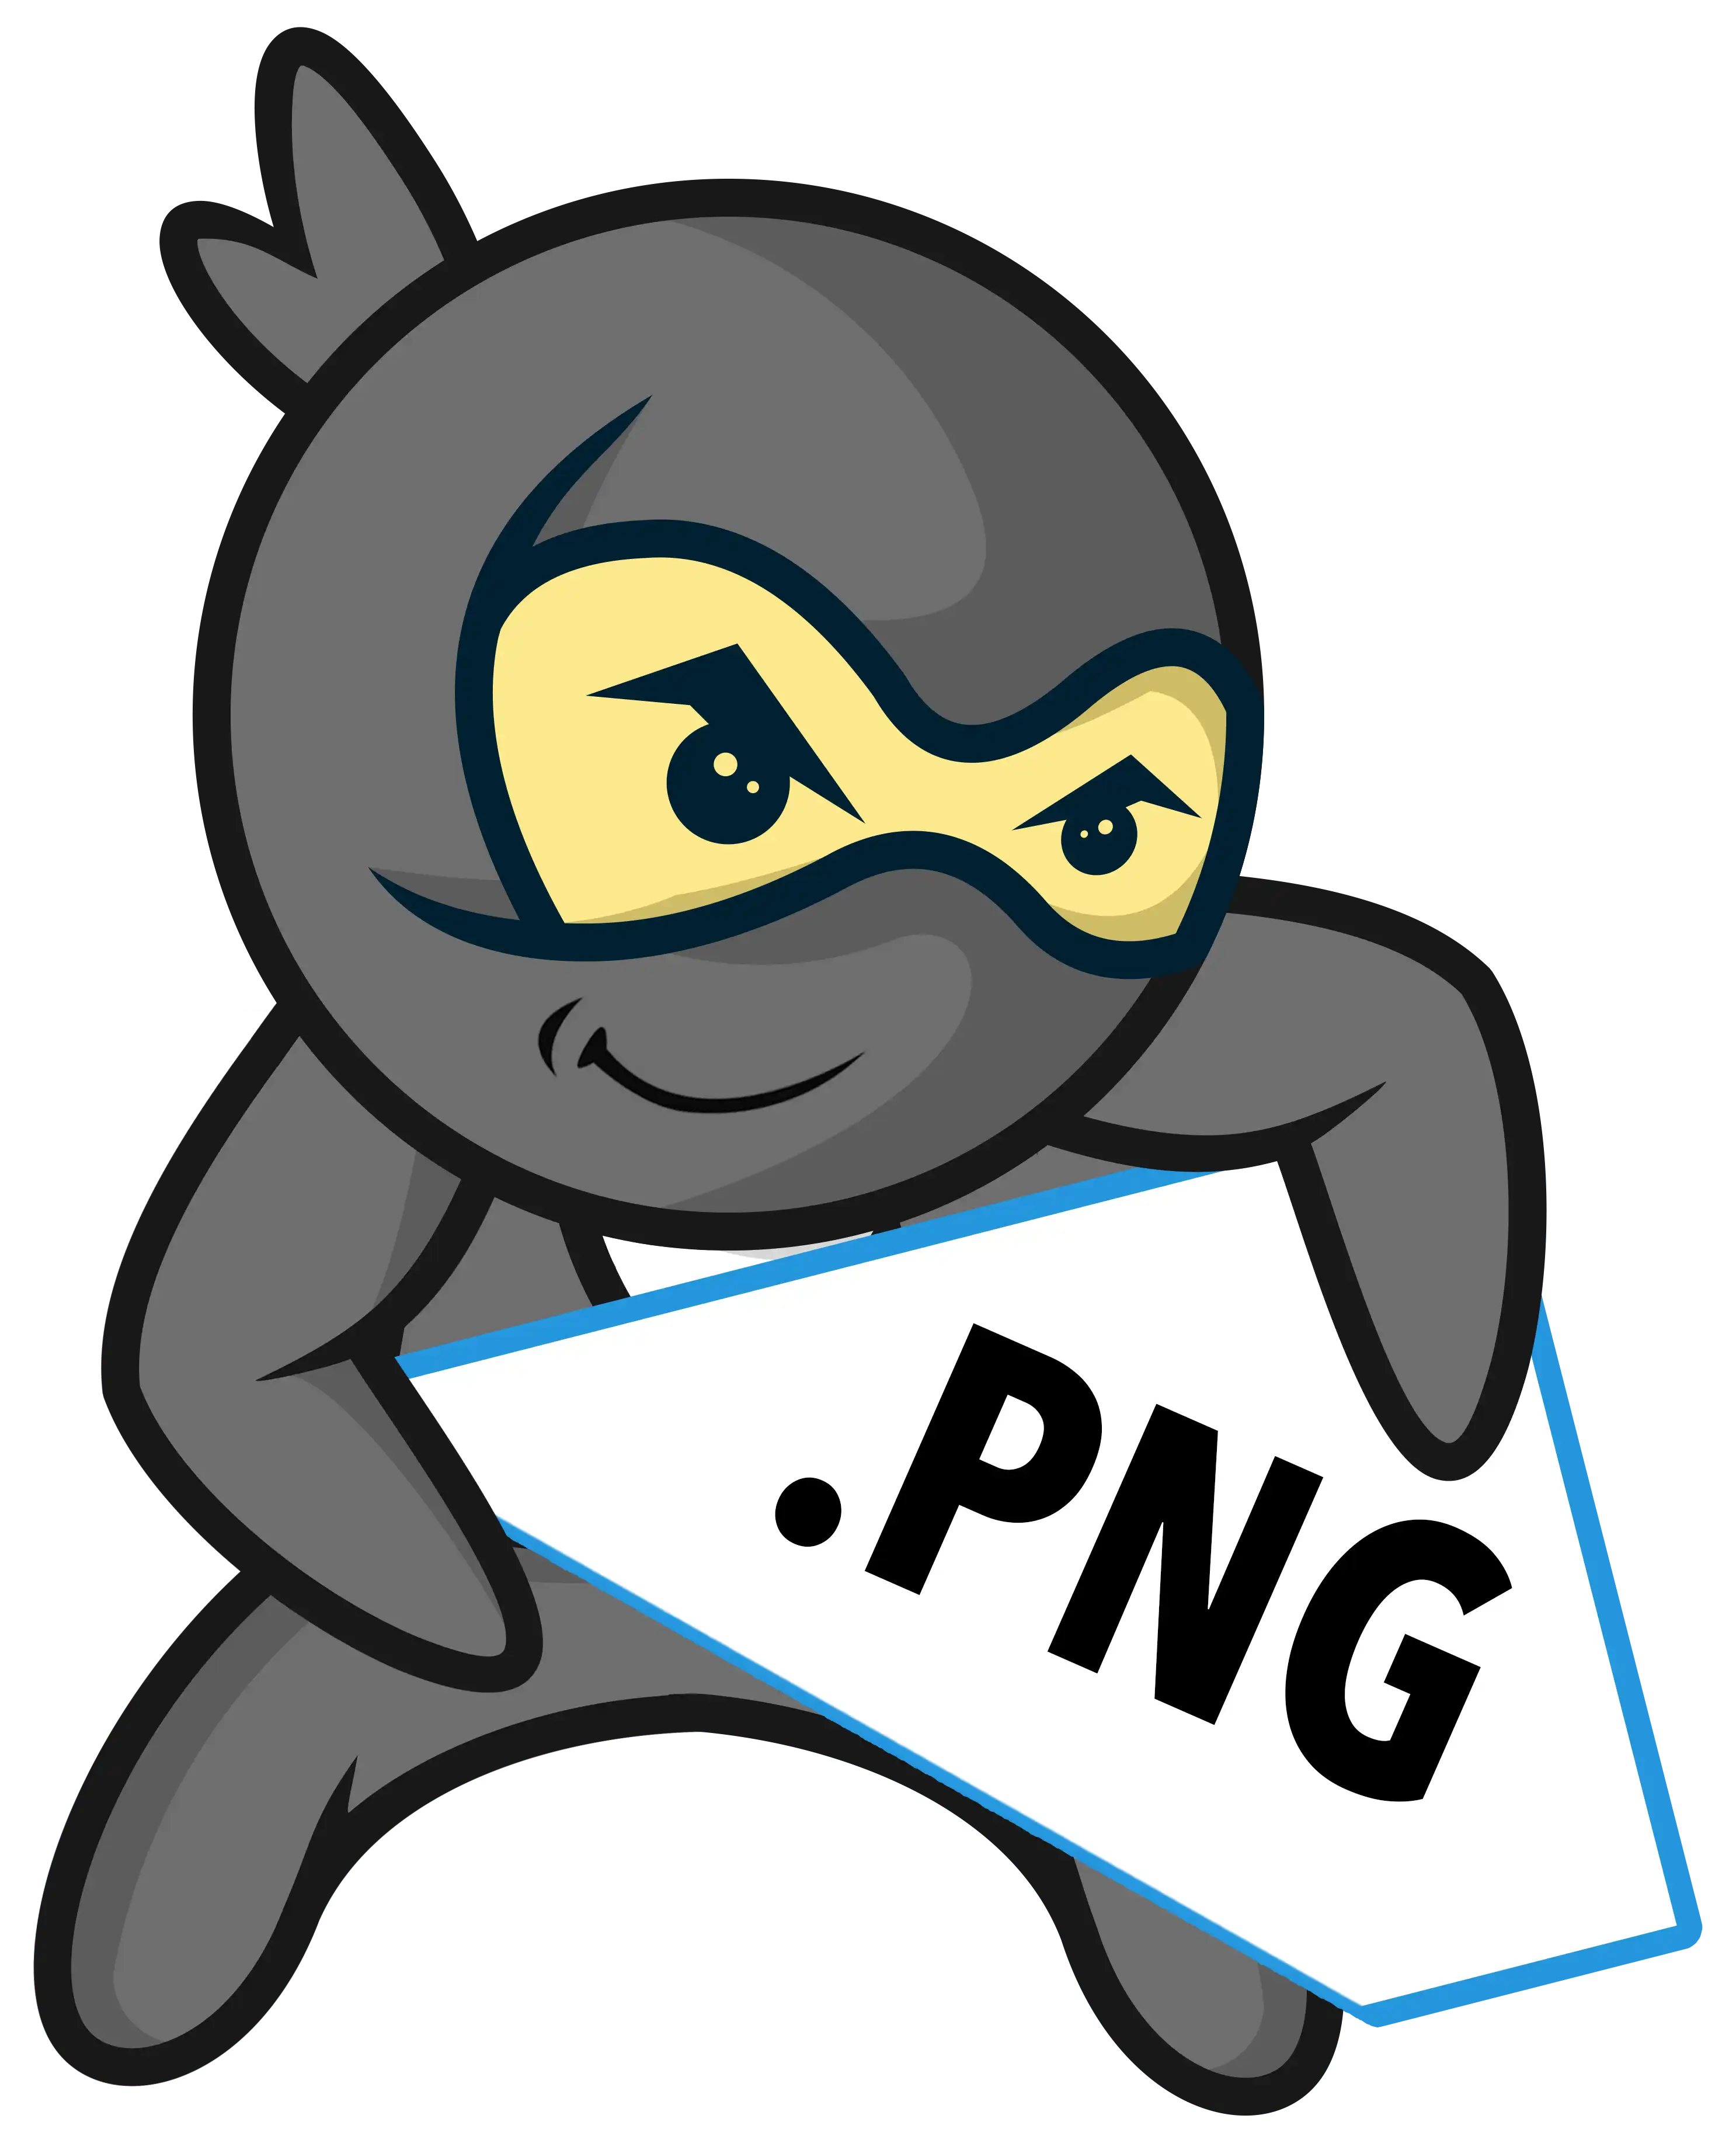 Online HDR Image Viewer | Gray Ninja logo by Image Convert Ninja